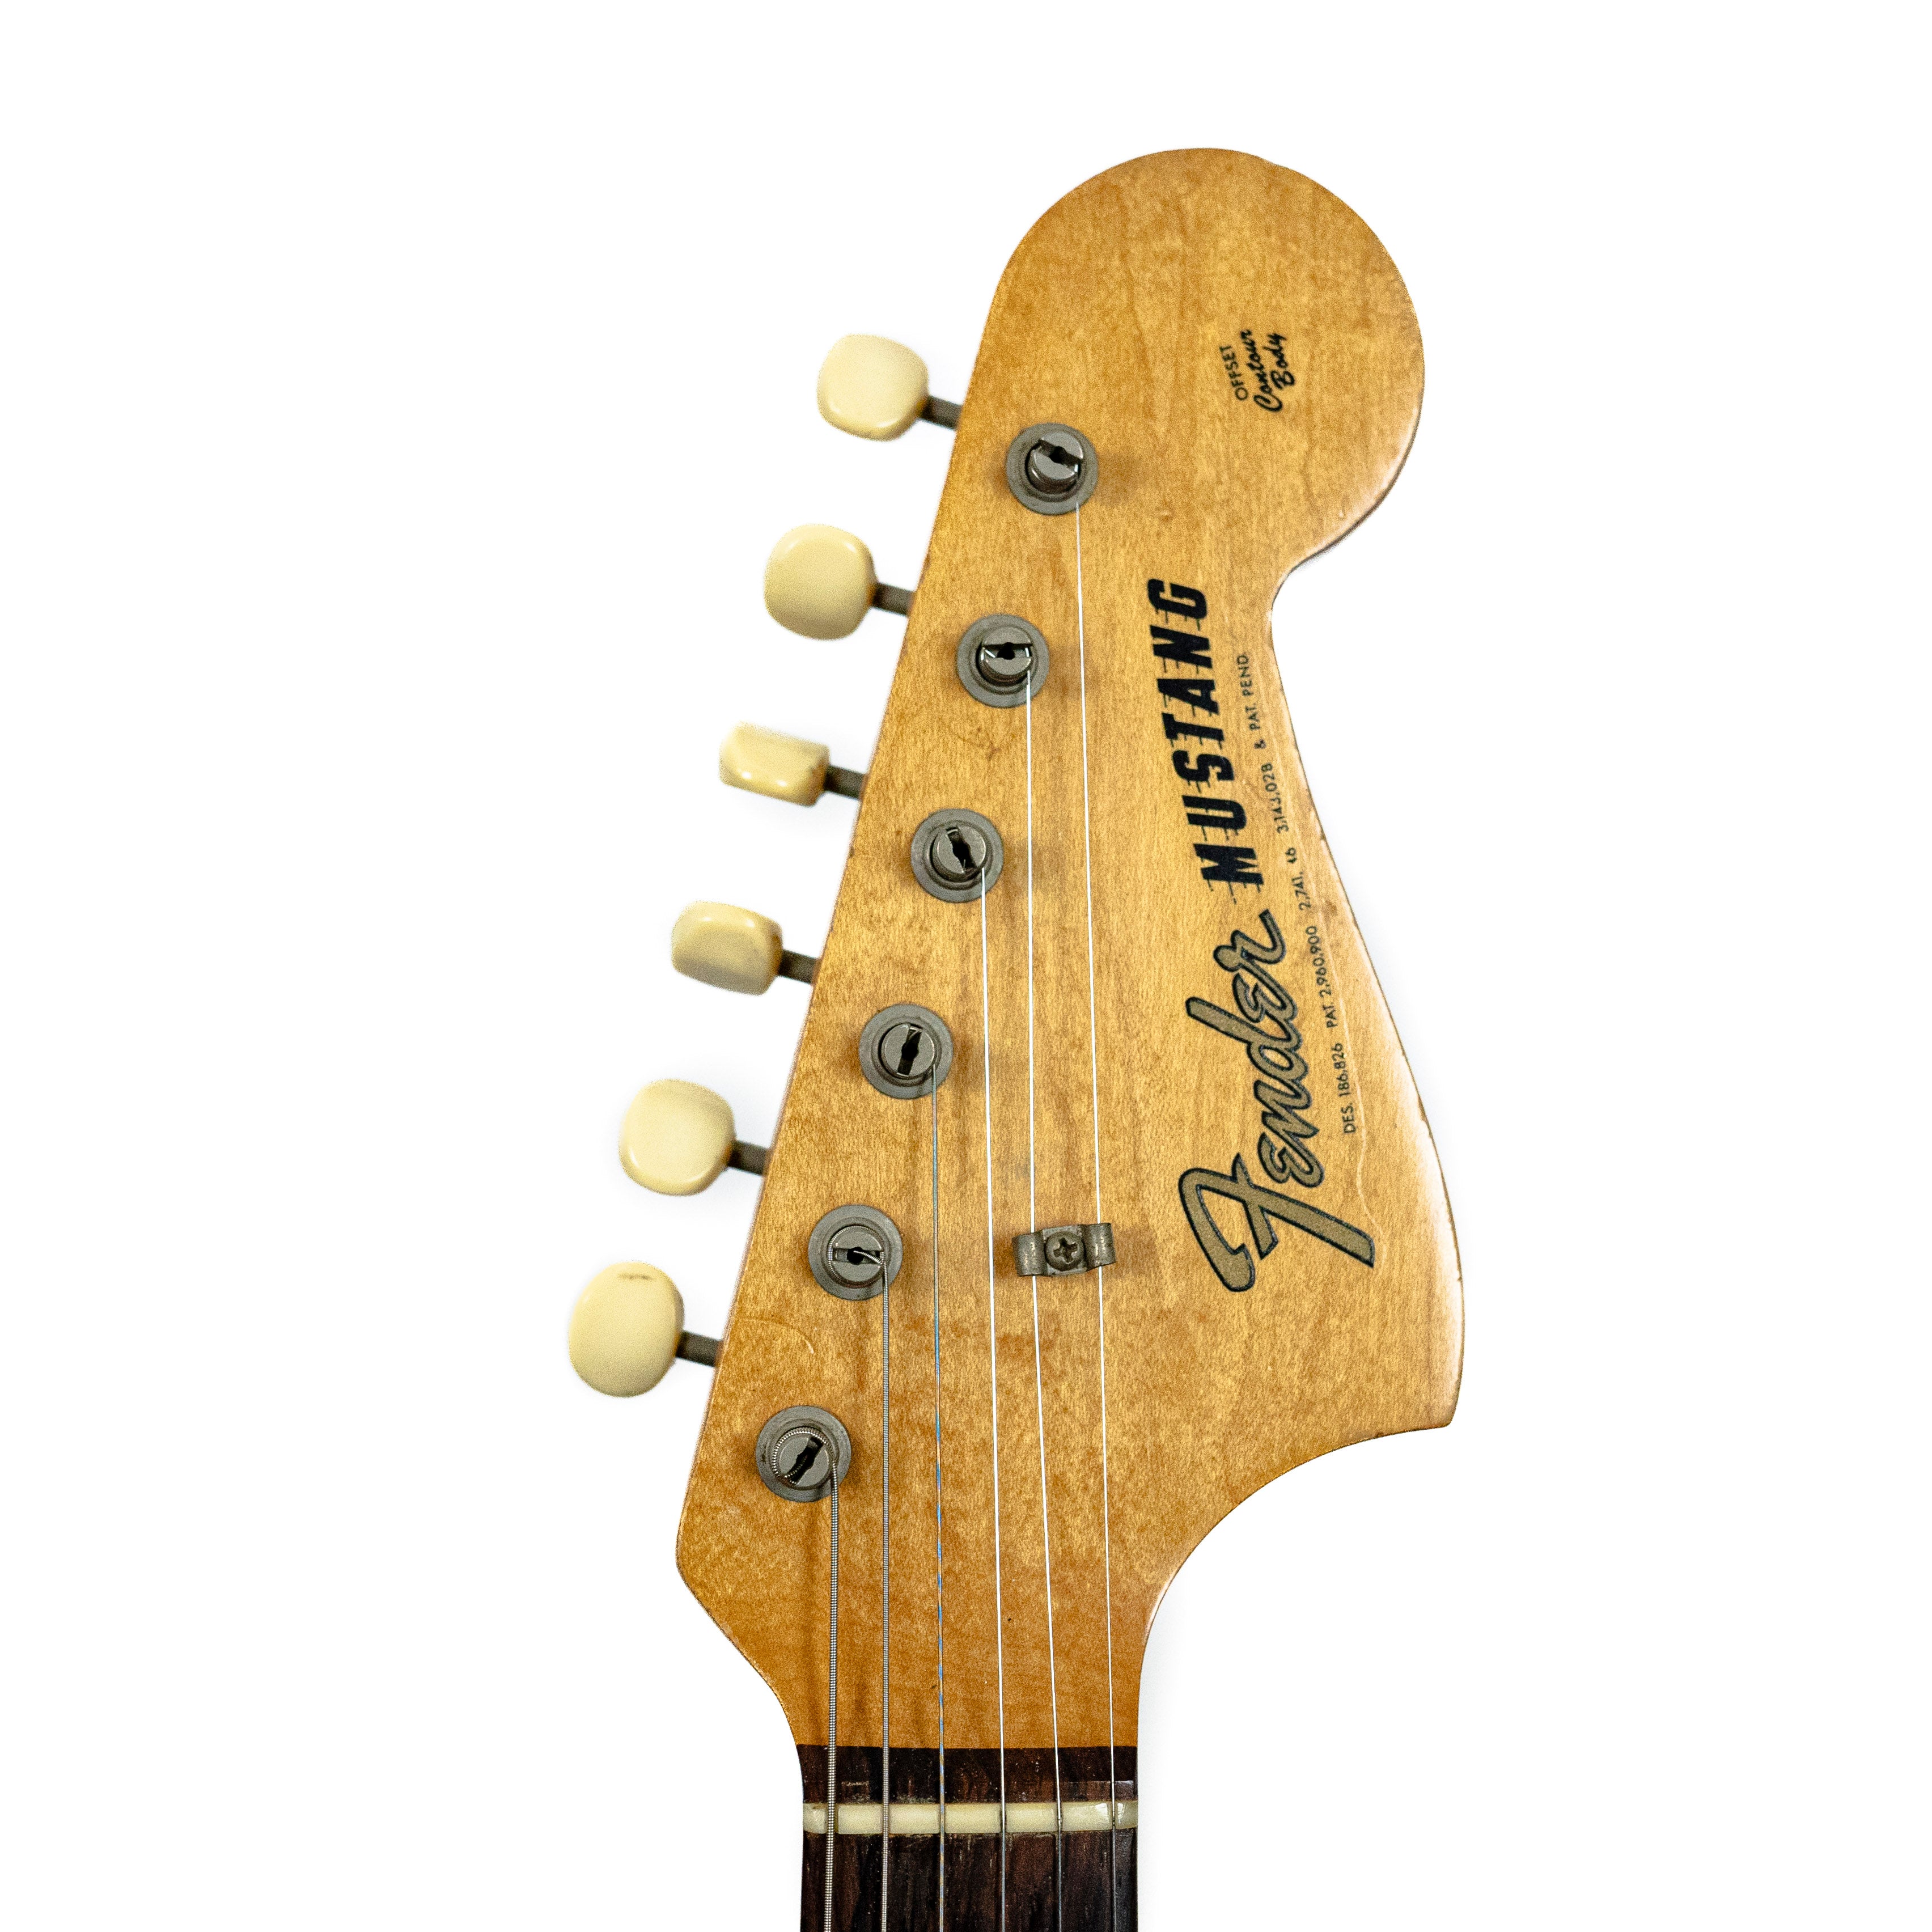 Fender 1964/65 Mustang Daphne Blue